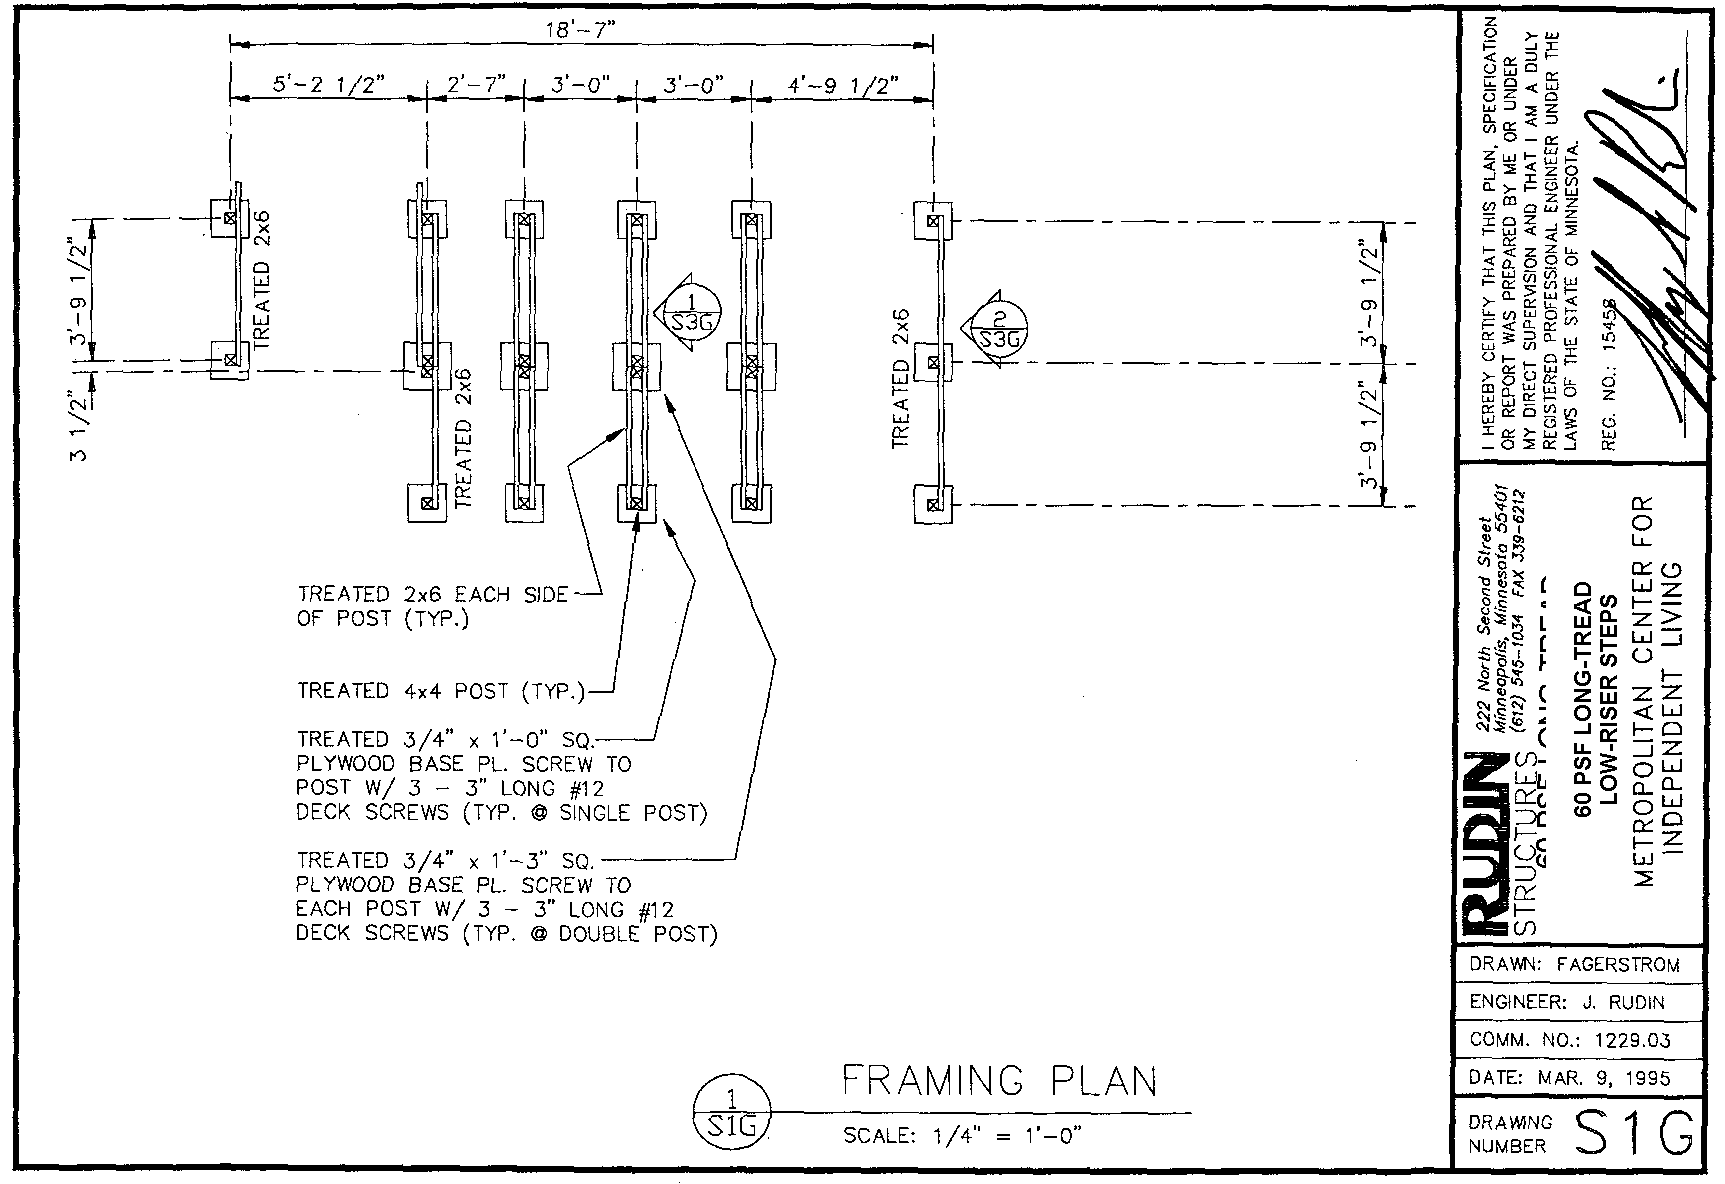 [engineering drawing of 180-degree turn framing]